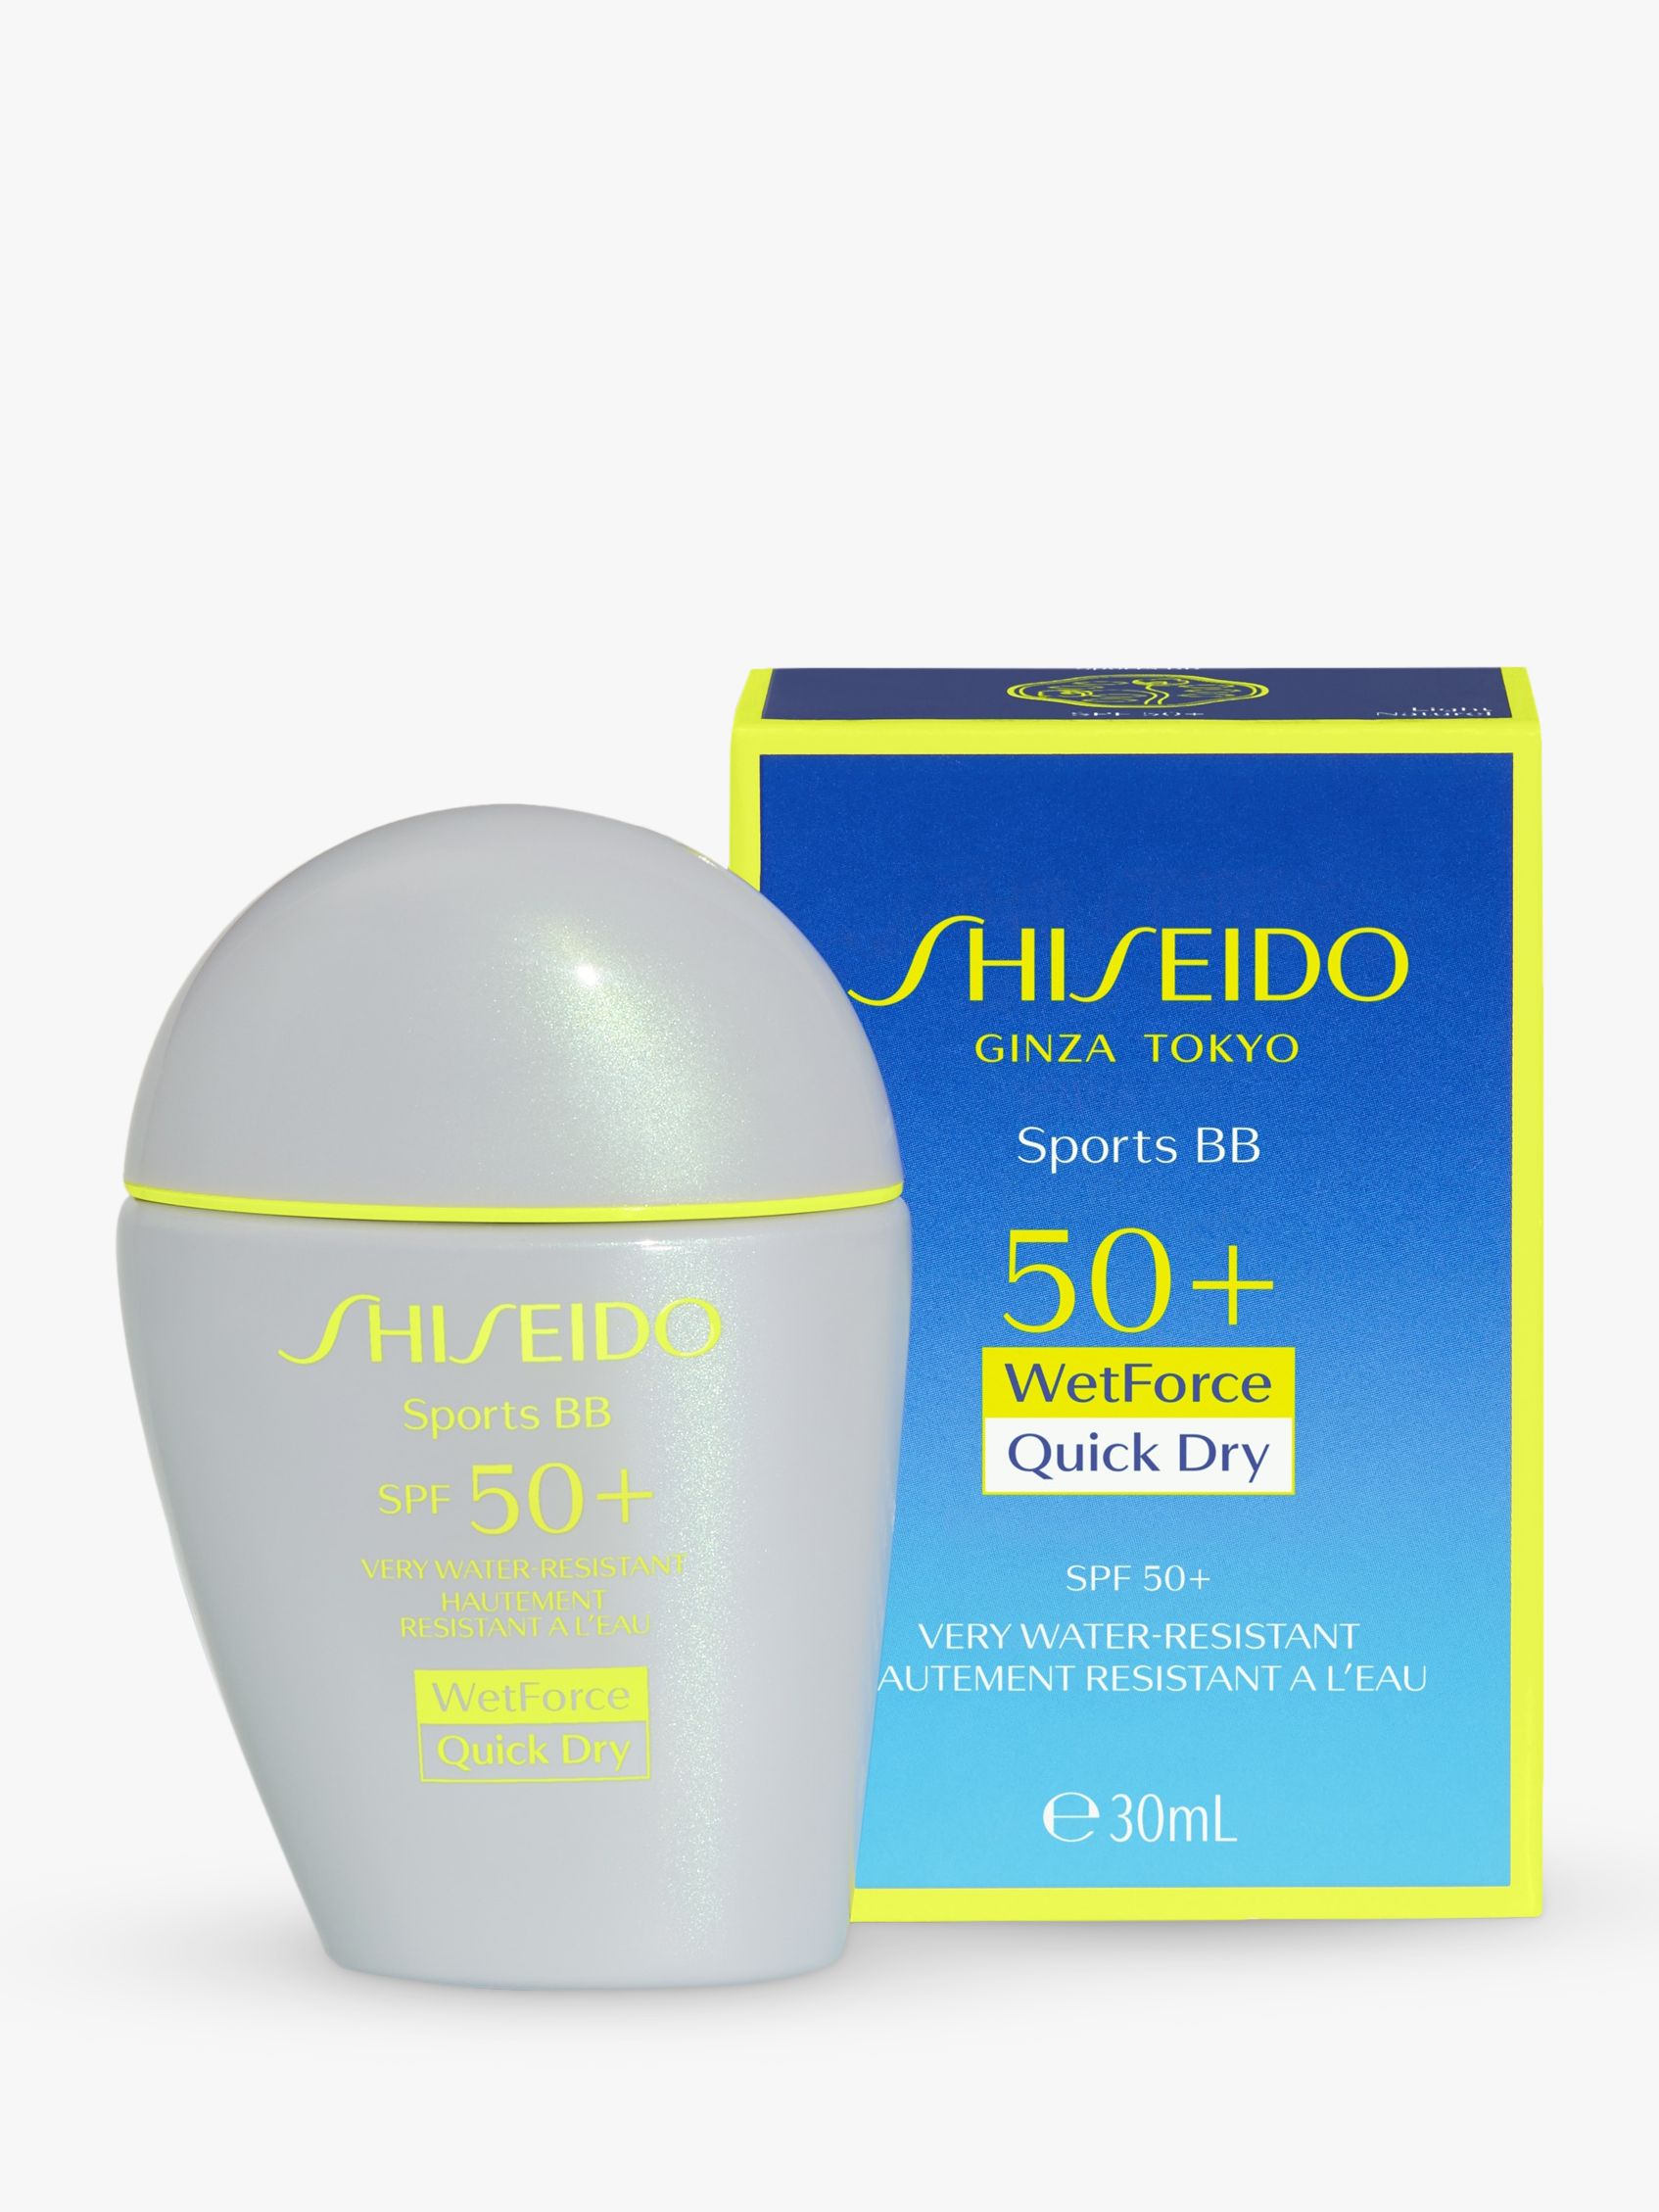 Shiseido Sports BB Fluid SPF 50+, Medium